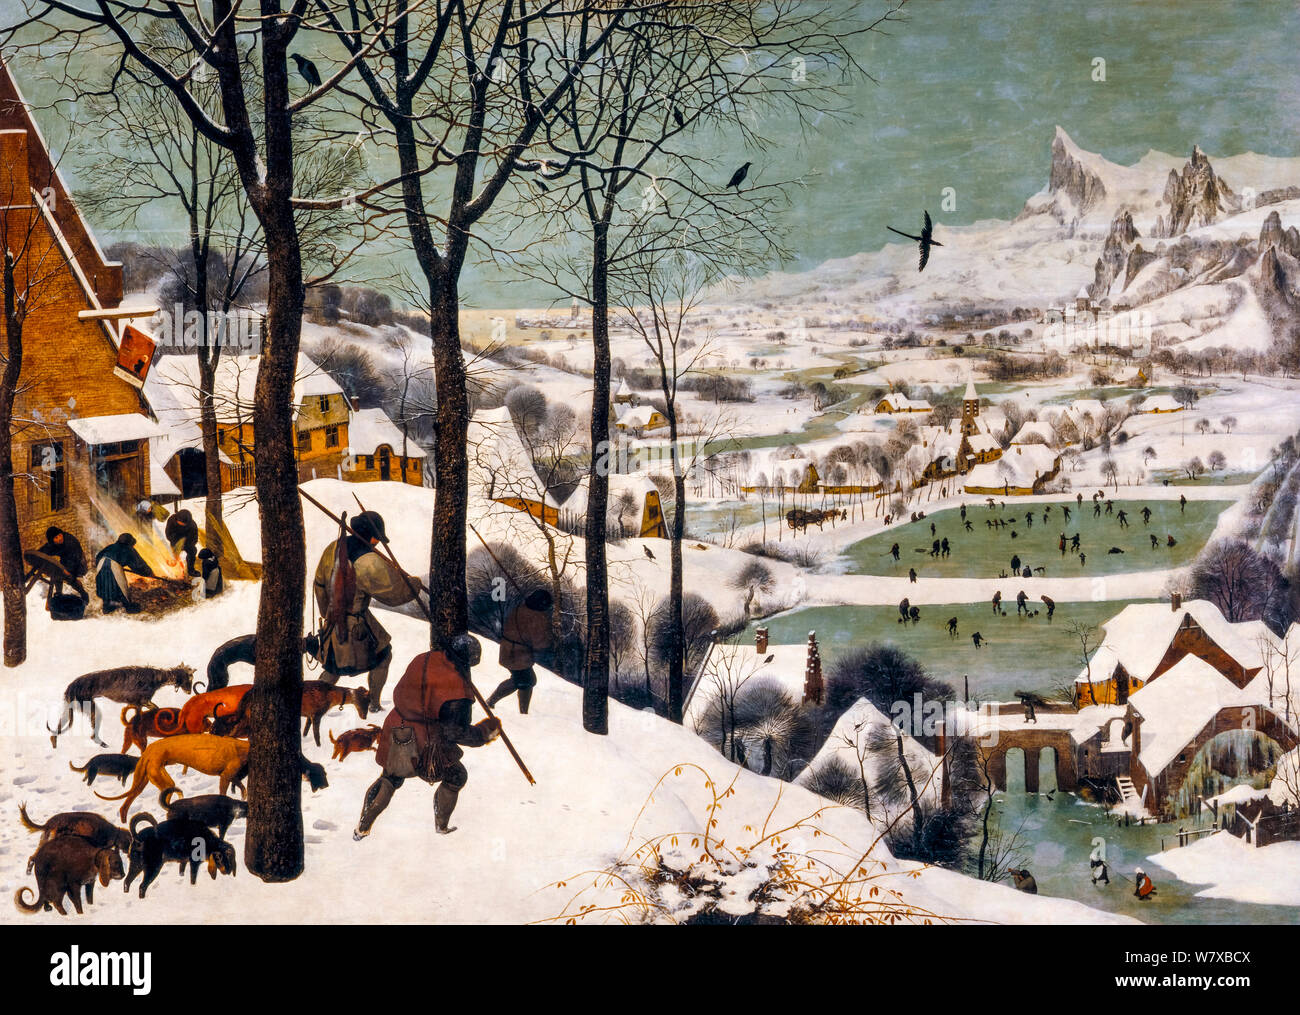 Pieter Bruegel the Elder, The Hunters in the Snow (Winter), Renaissance painting, 1565 Stock Photo